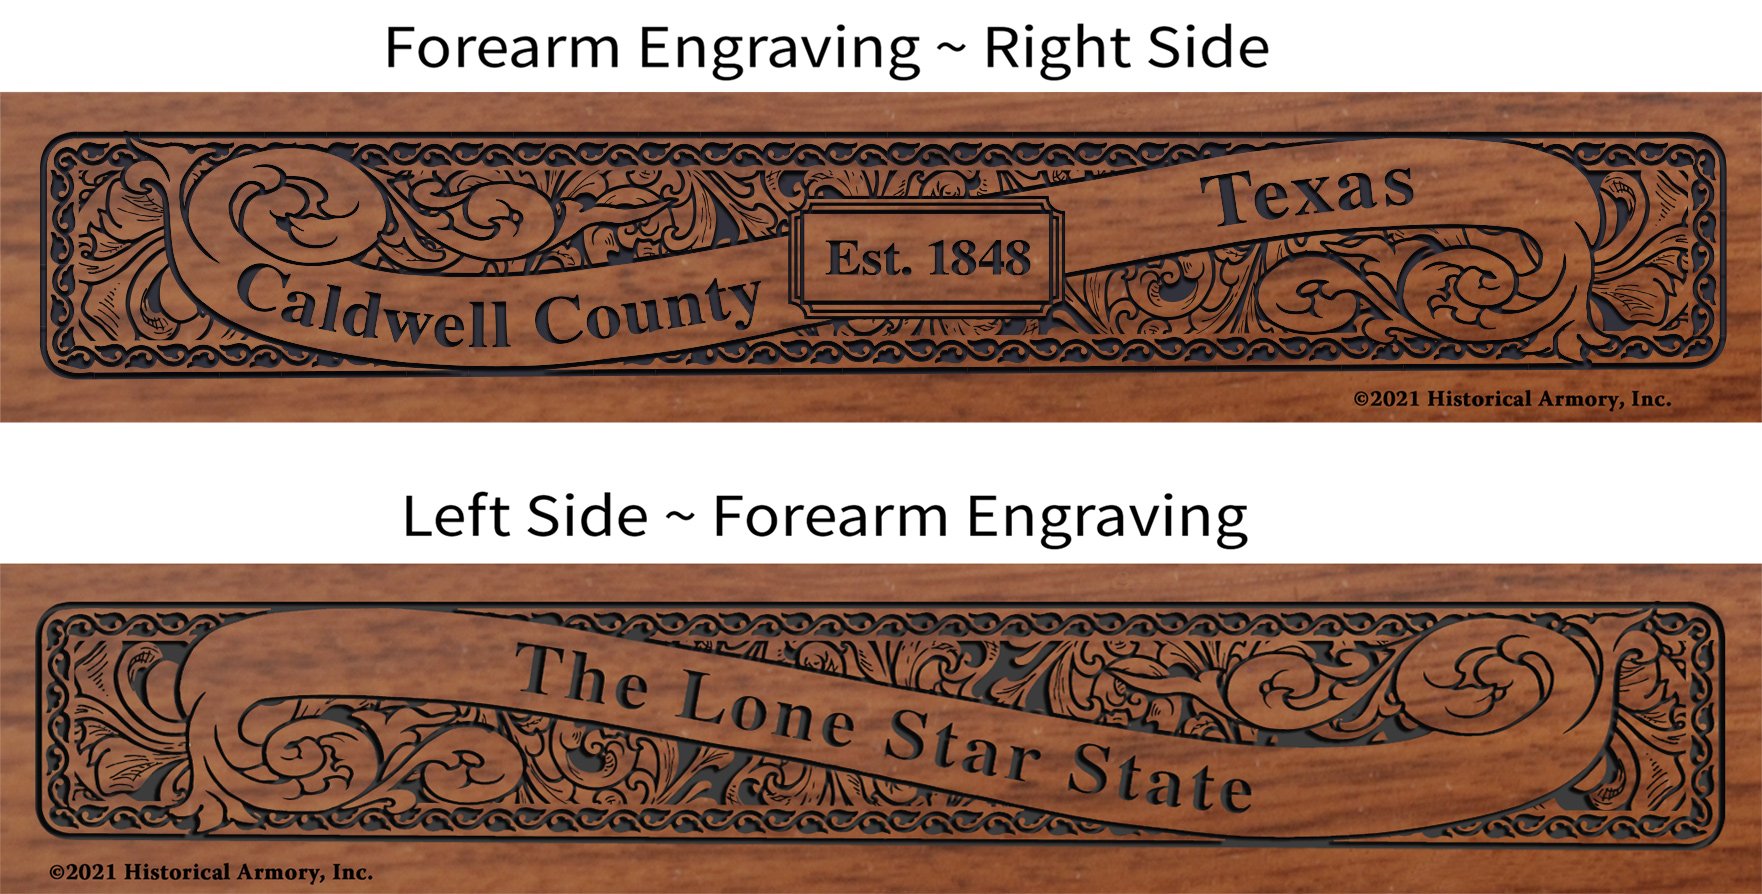 Caldwell County Texas Establishment and Motto History Engraved Rifle Forearm